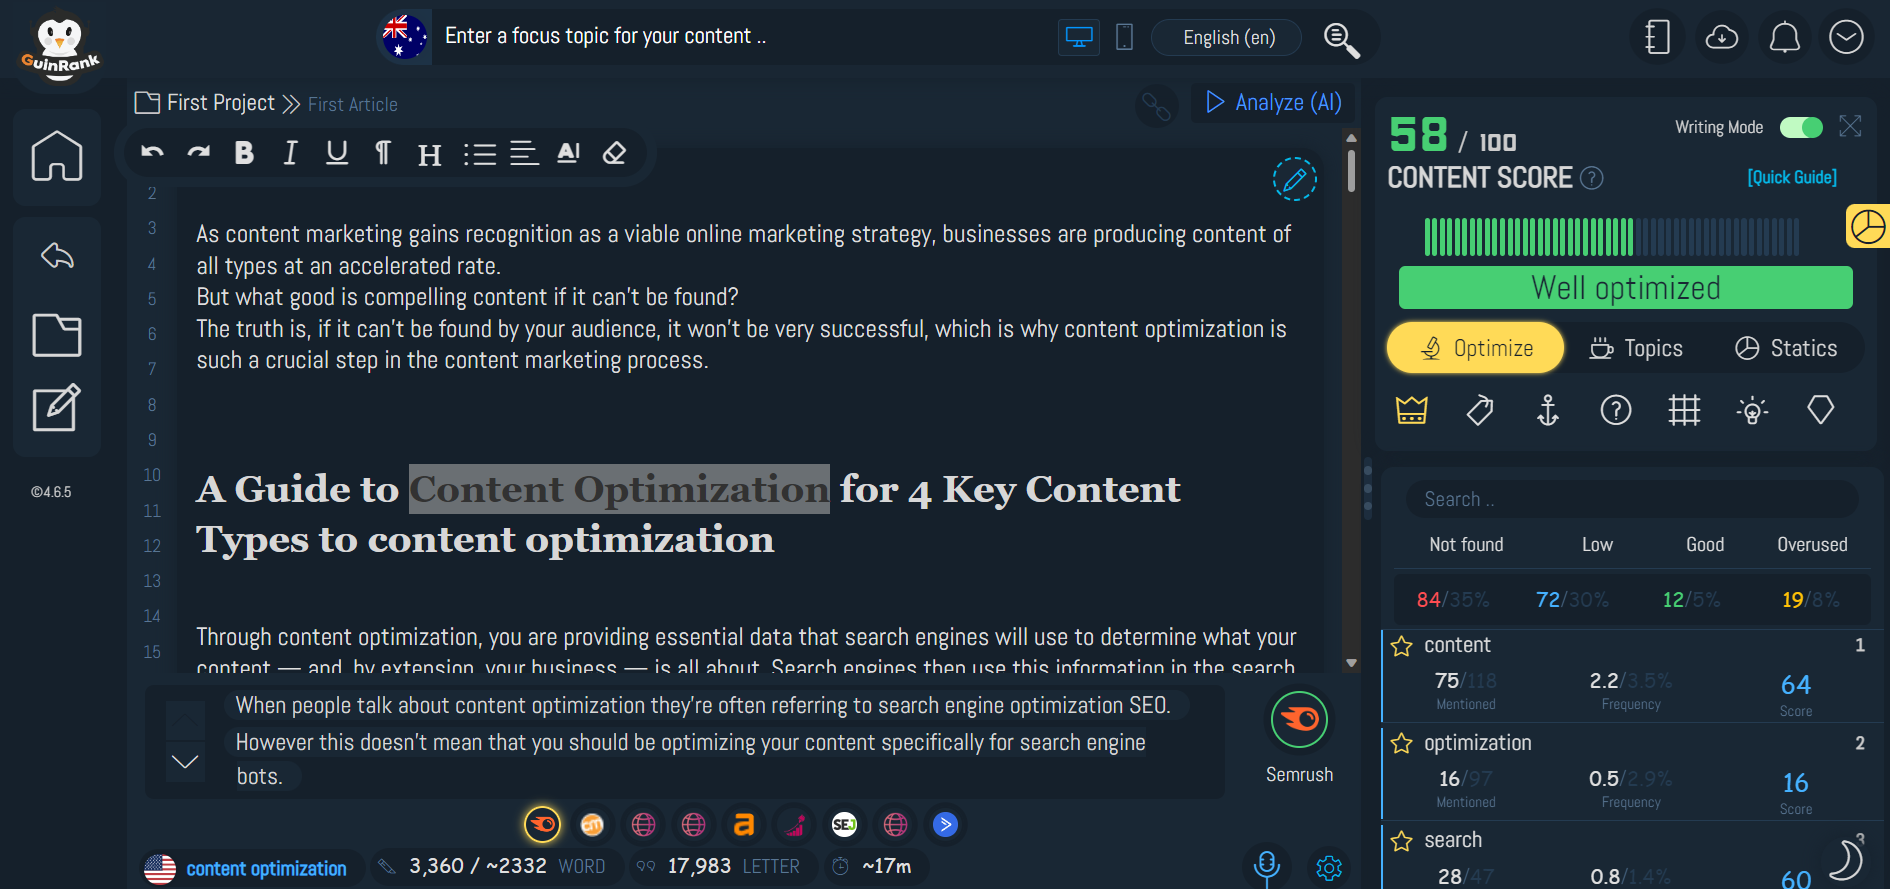 Content Optimization